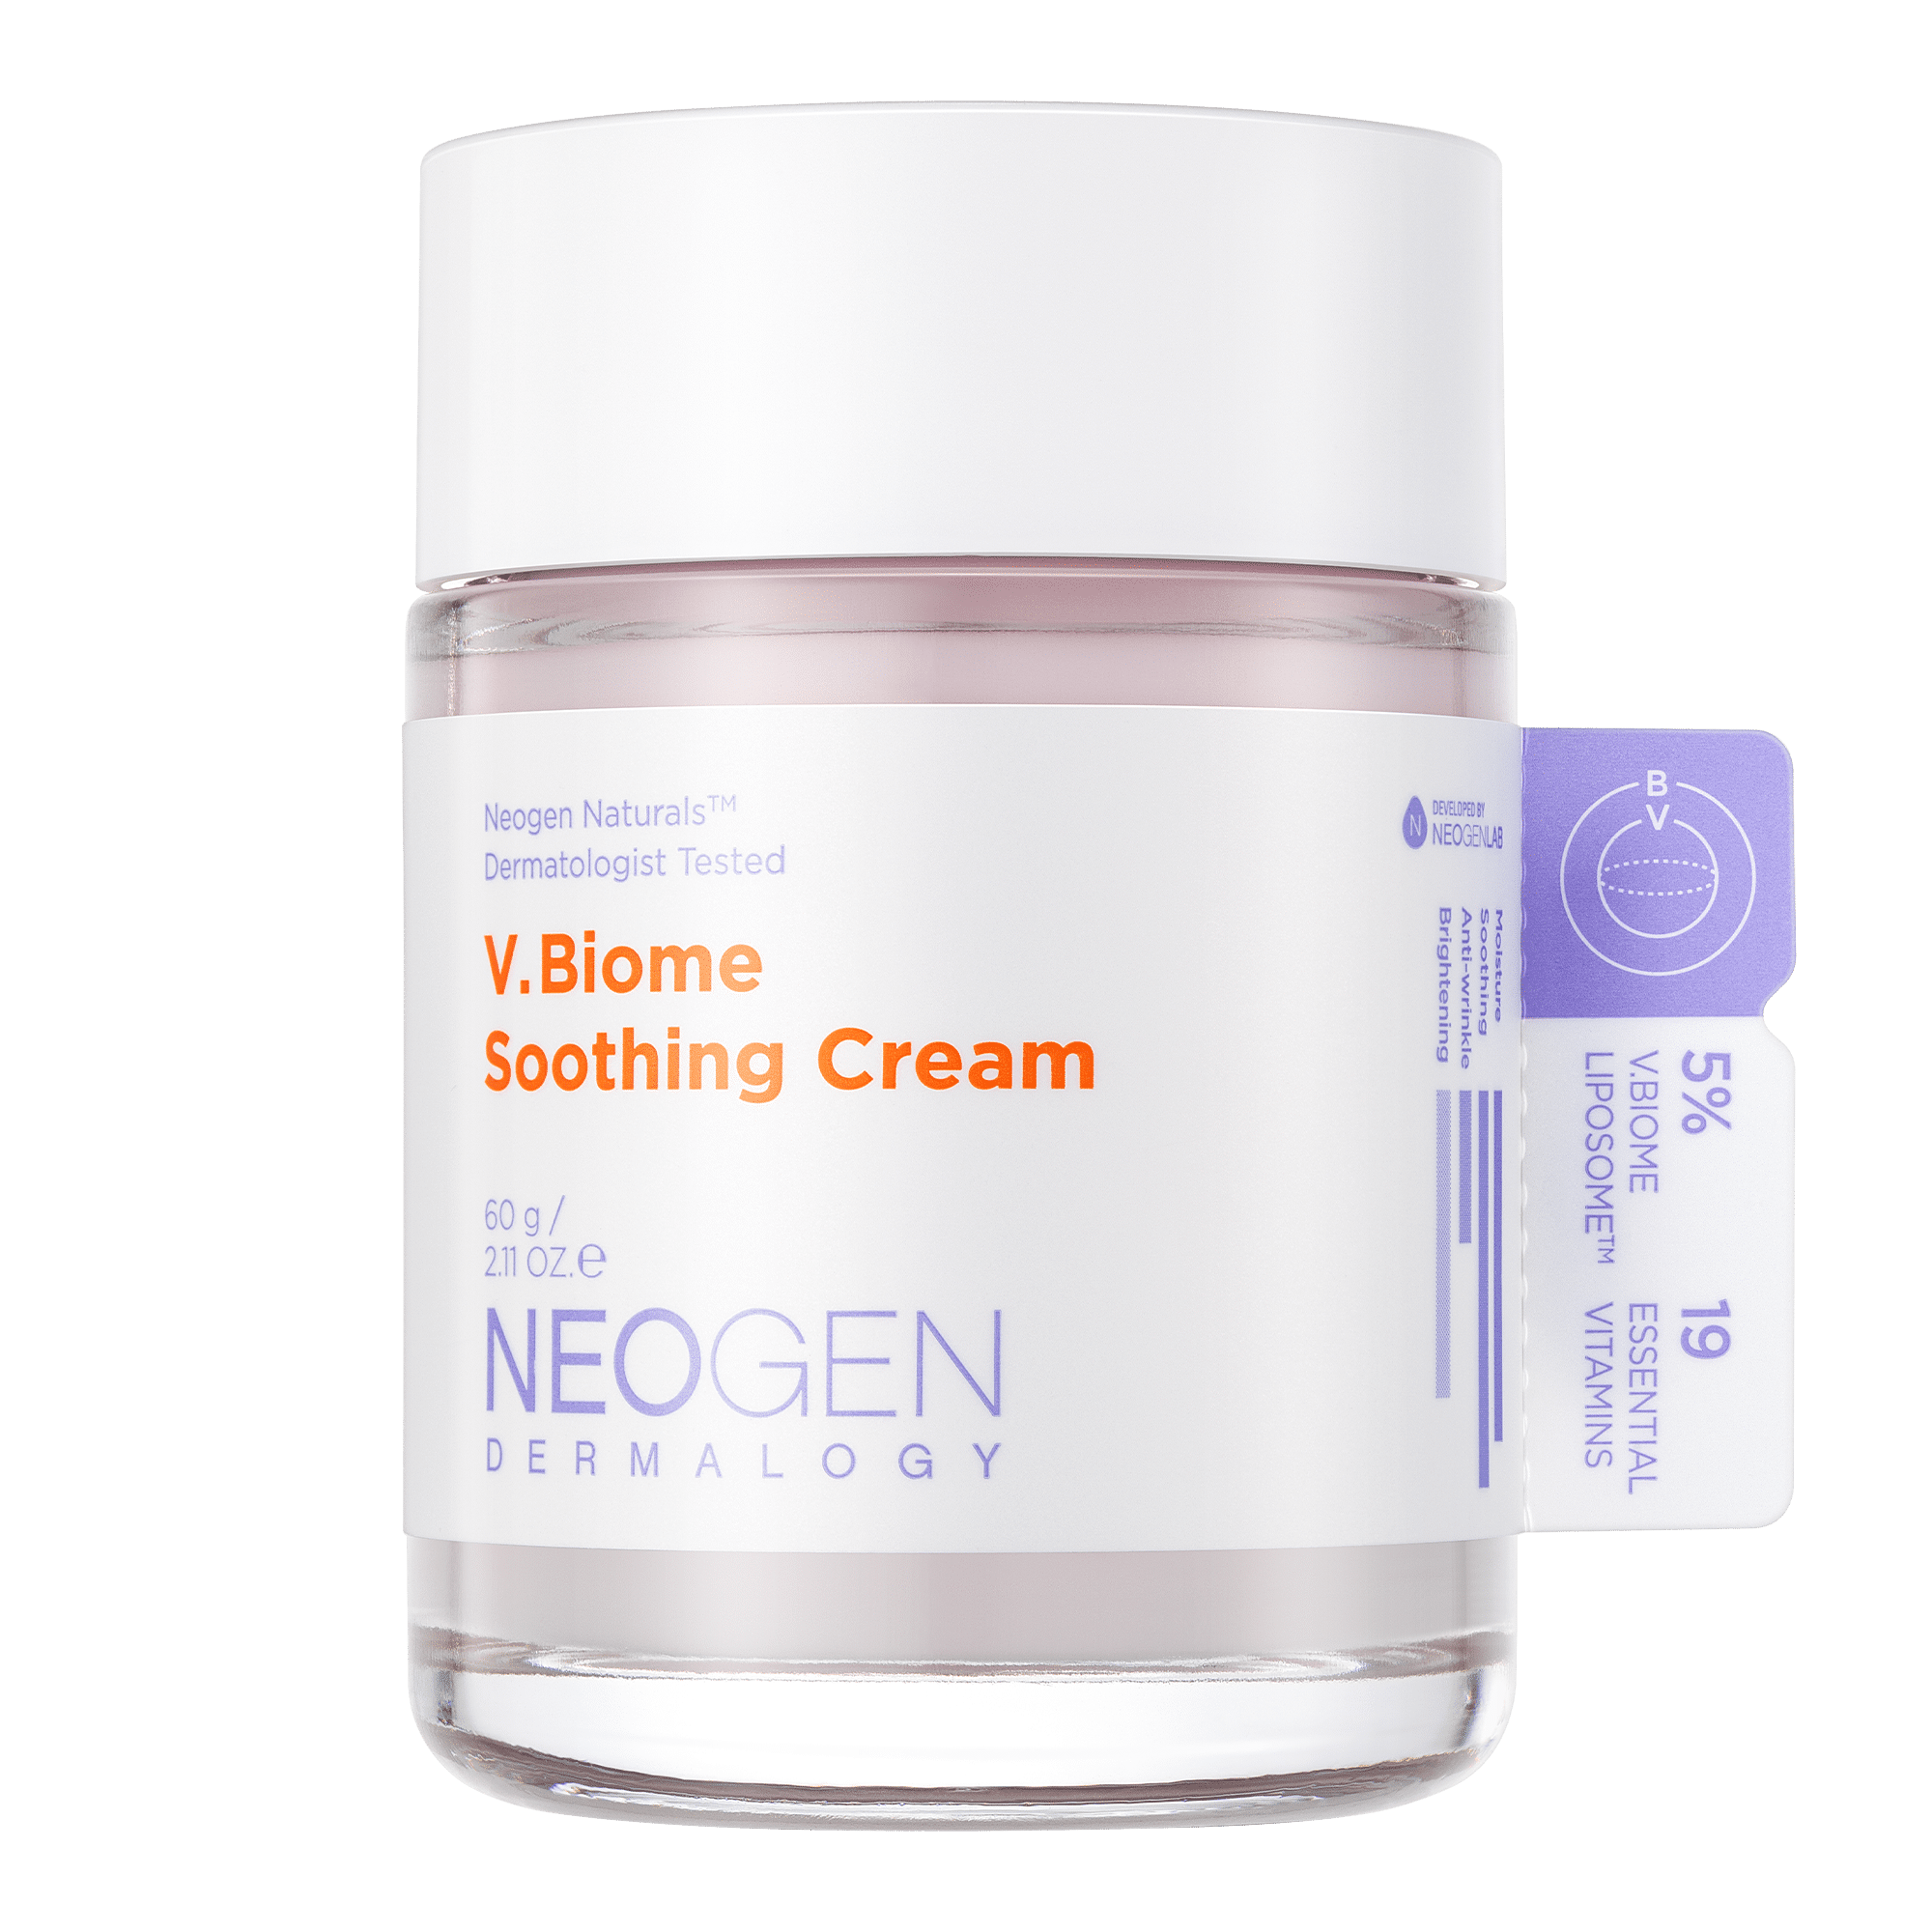 NEOGEN DERMALOGY - V.Biome Soothing Cream